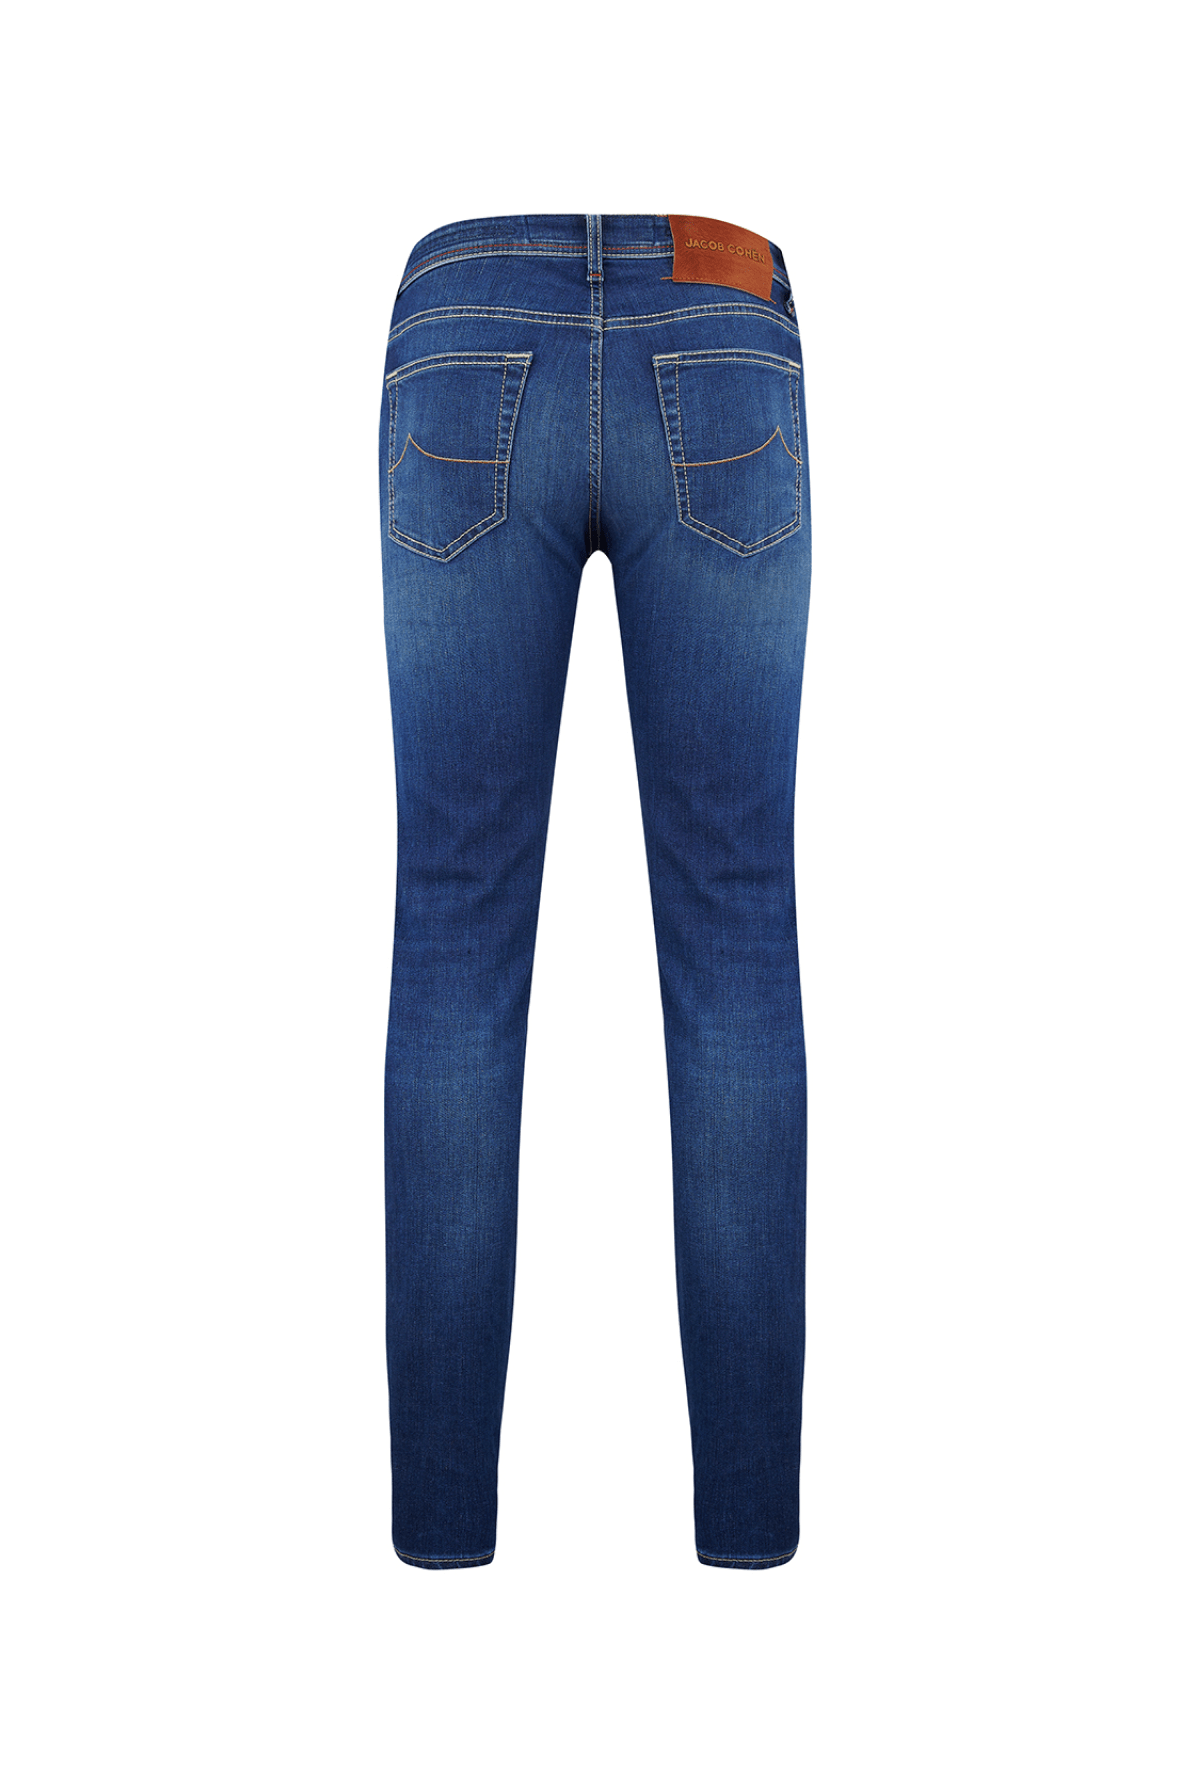 Jacob Cohën Men's Nick Slim-Fit Jeans Blue - Back View